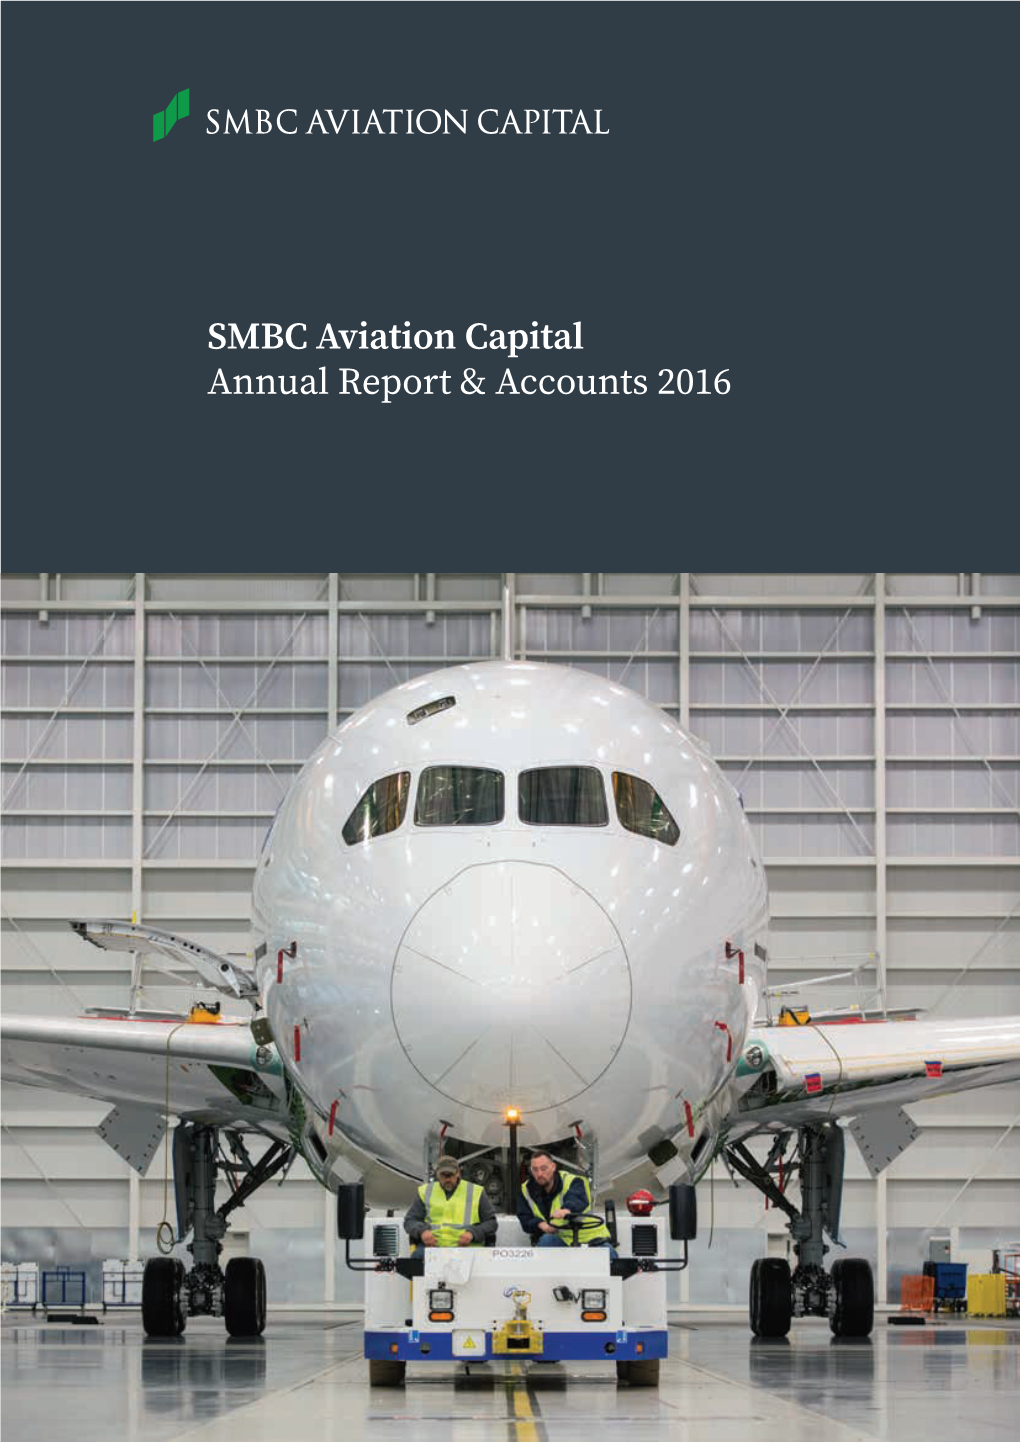 SMBC Aviation Capital Annual Report & Accounts 2016